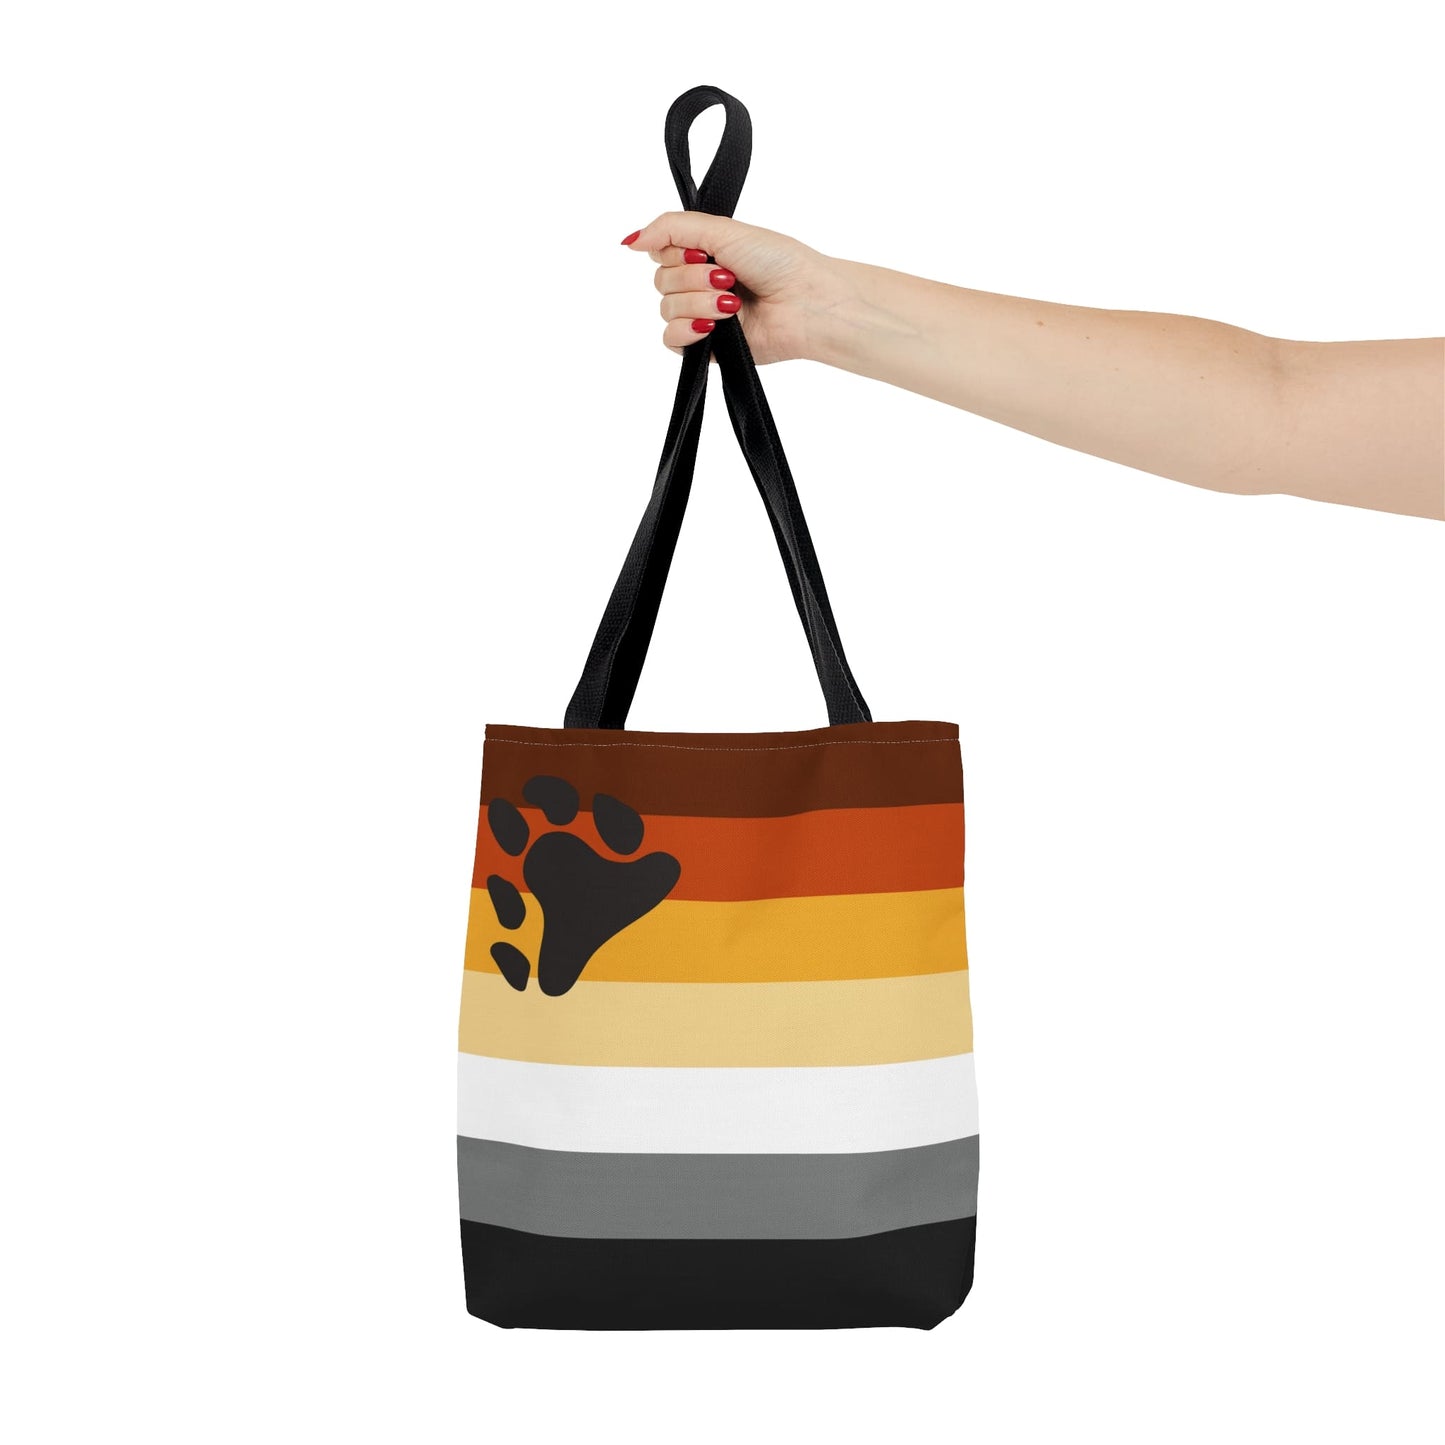 bear pride flag tote bag, small